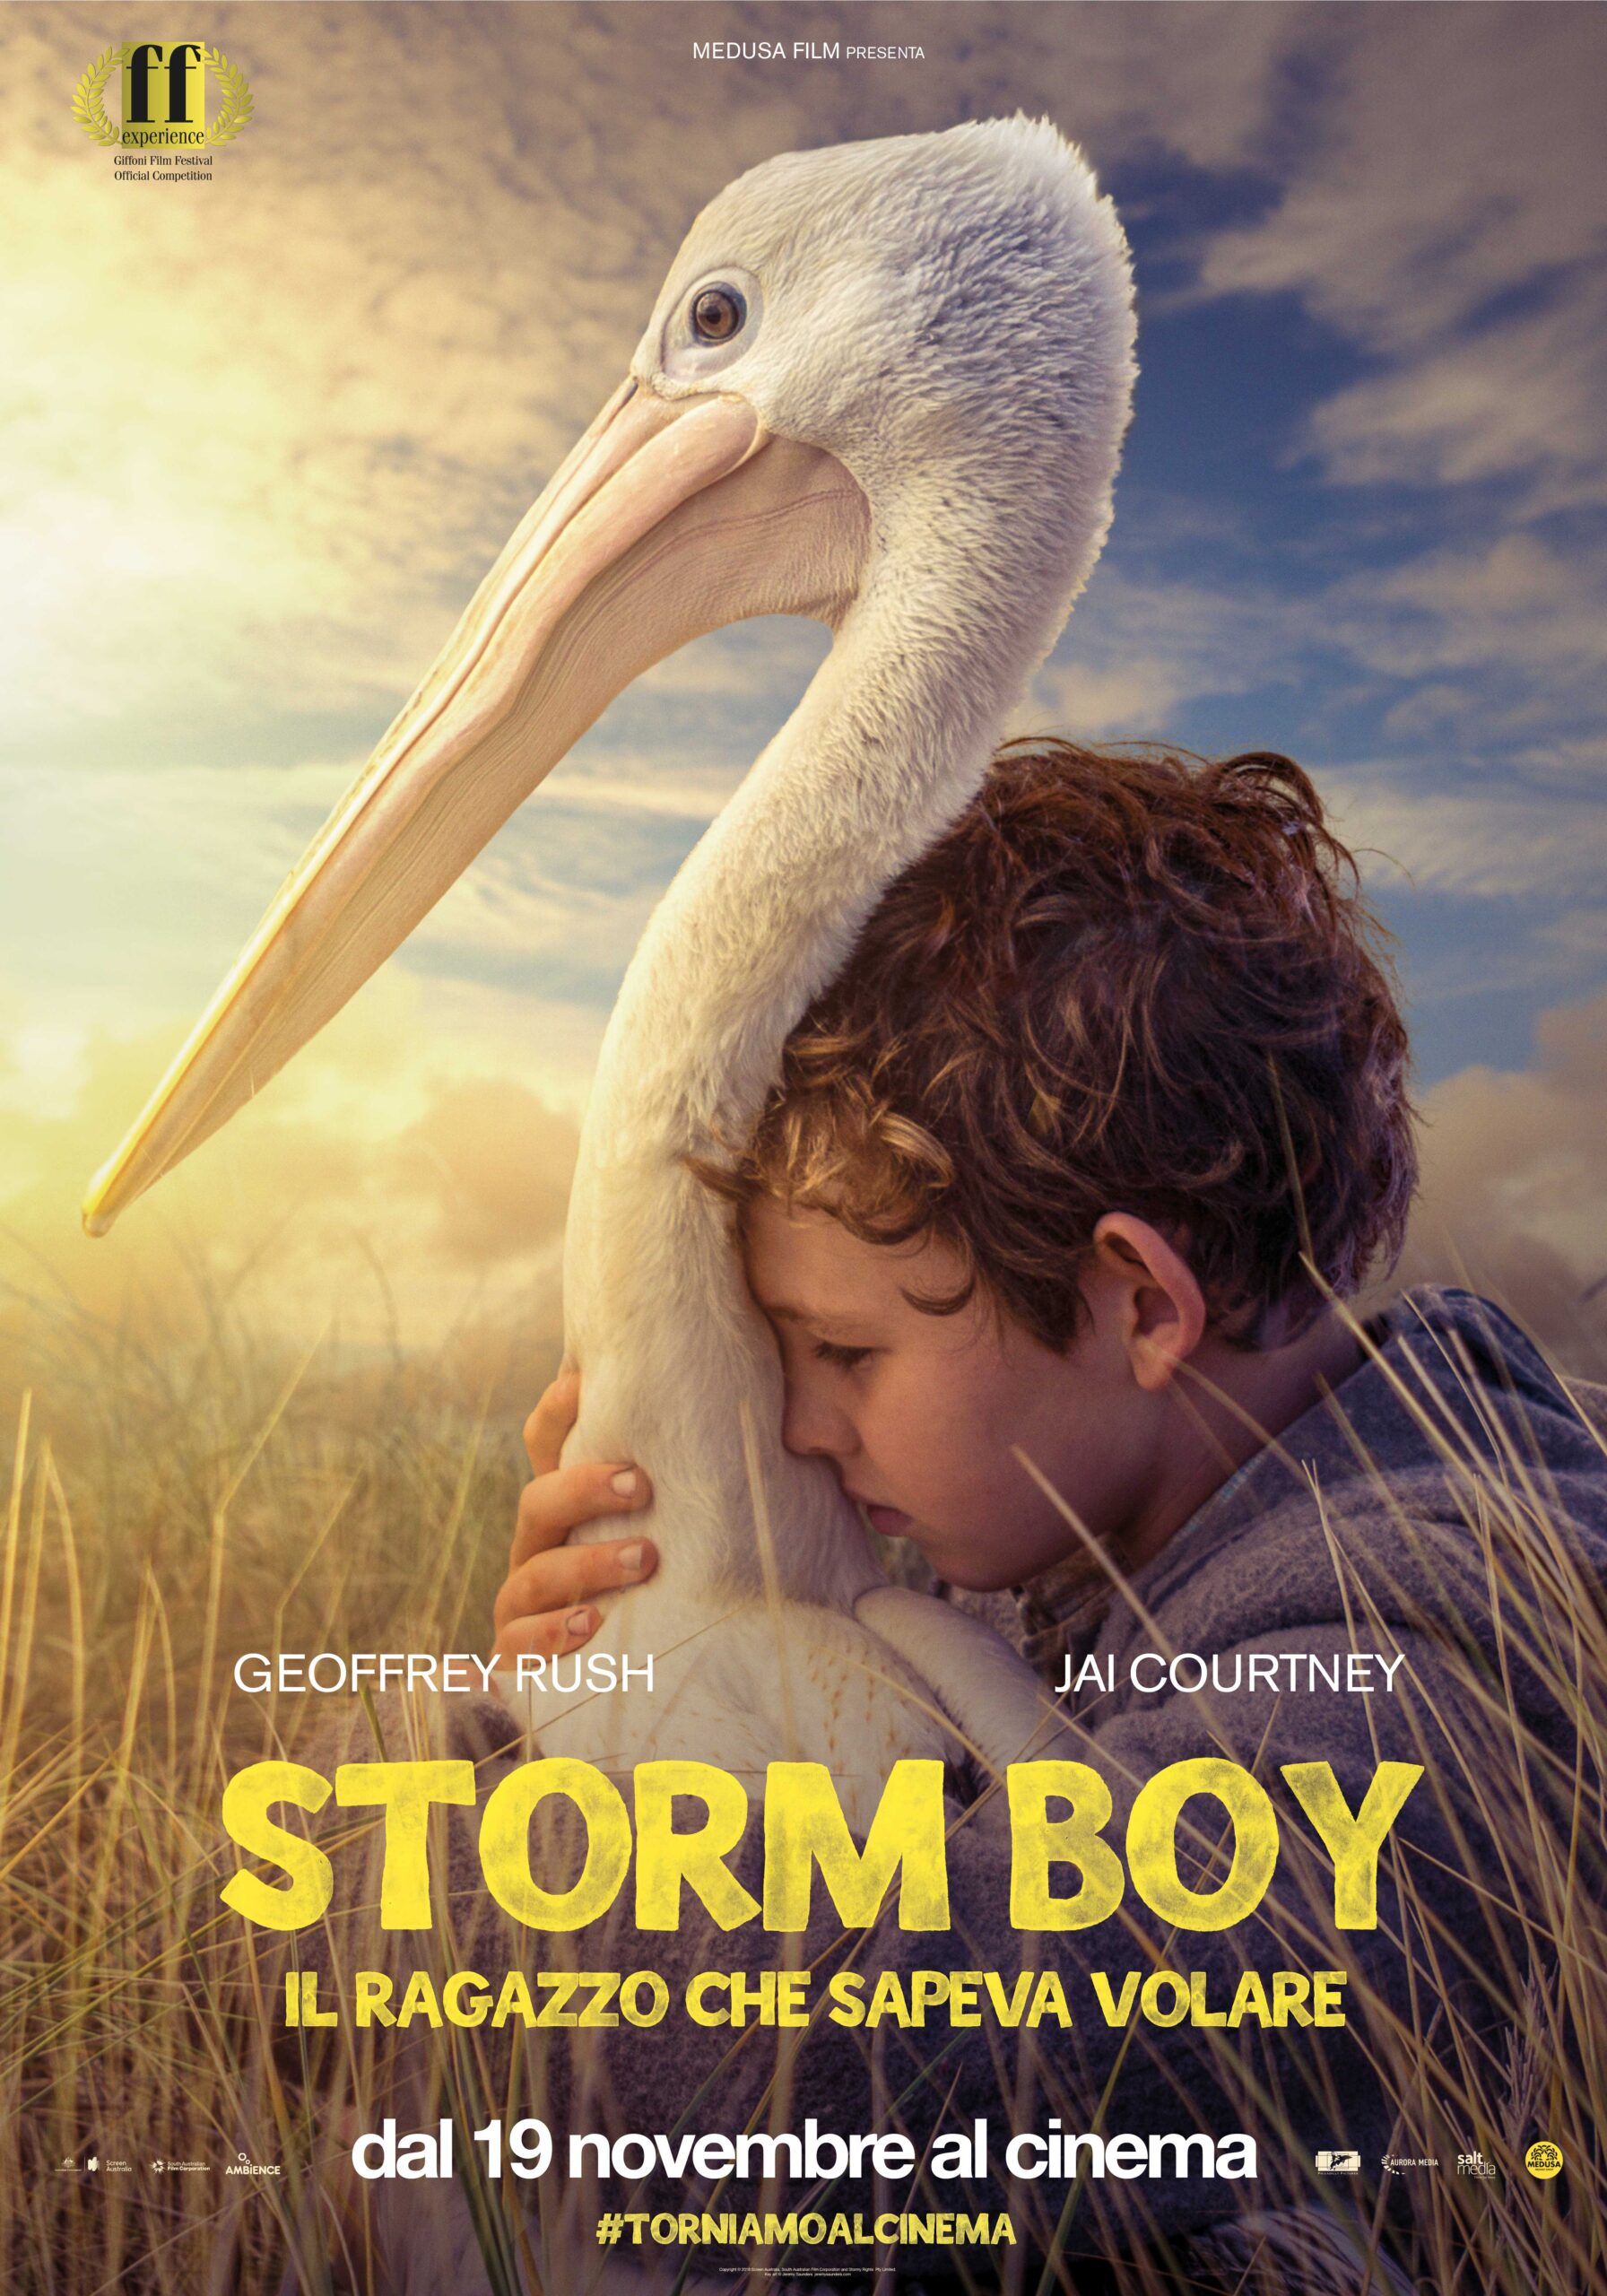 Medusa Film presenta “Storm Boy” con Jai Courtney e Geoffrey Rush